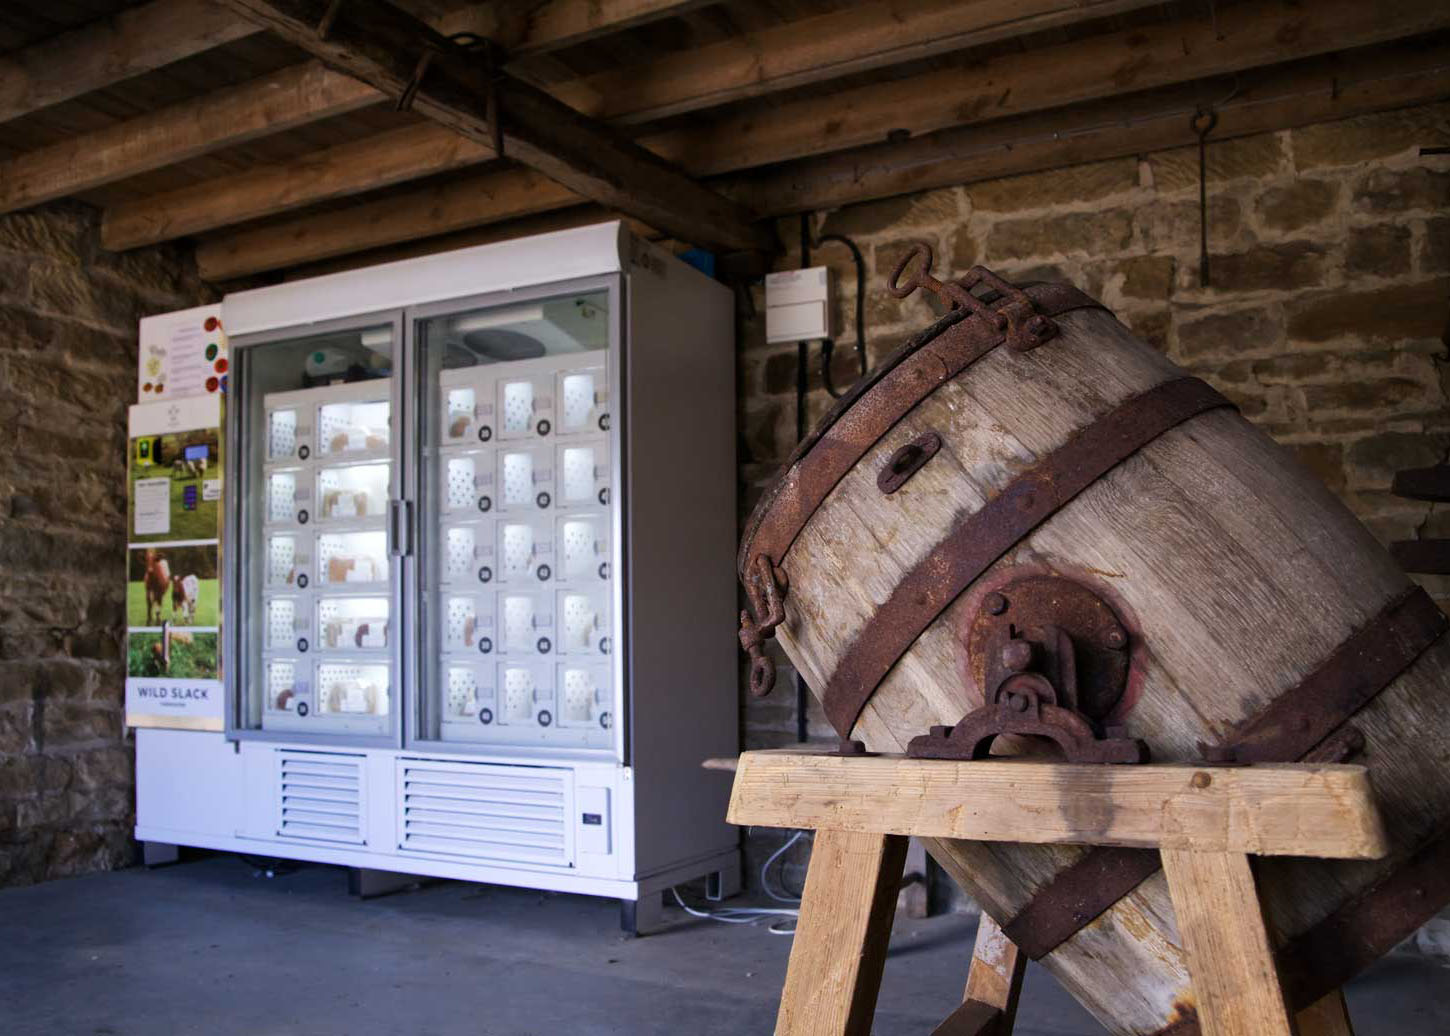 Large vending machine for farm produce at Wildslack Farm.